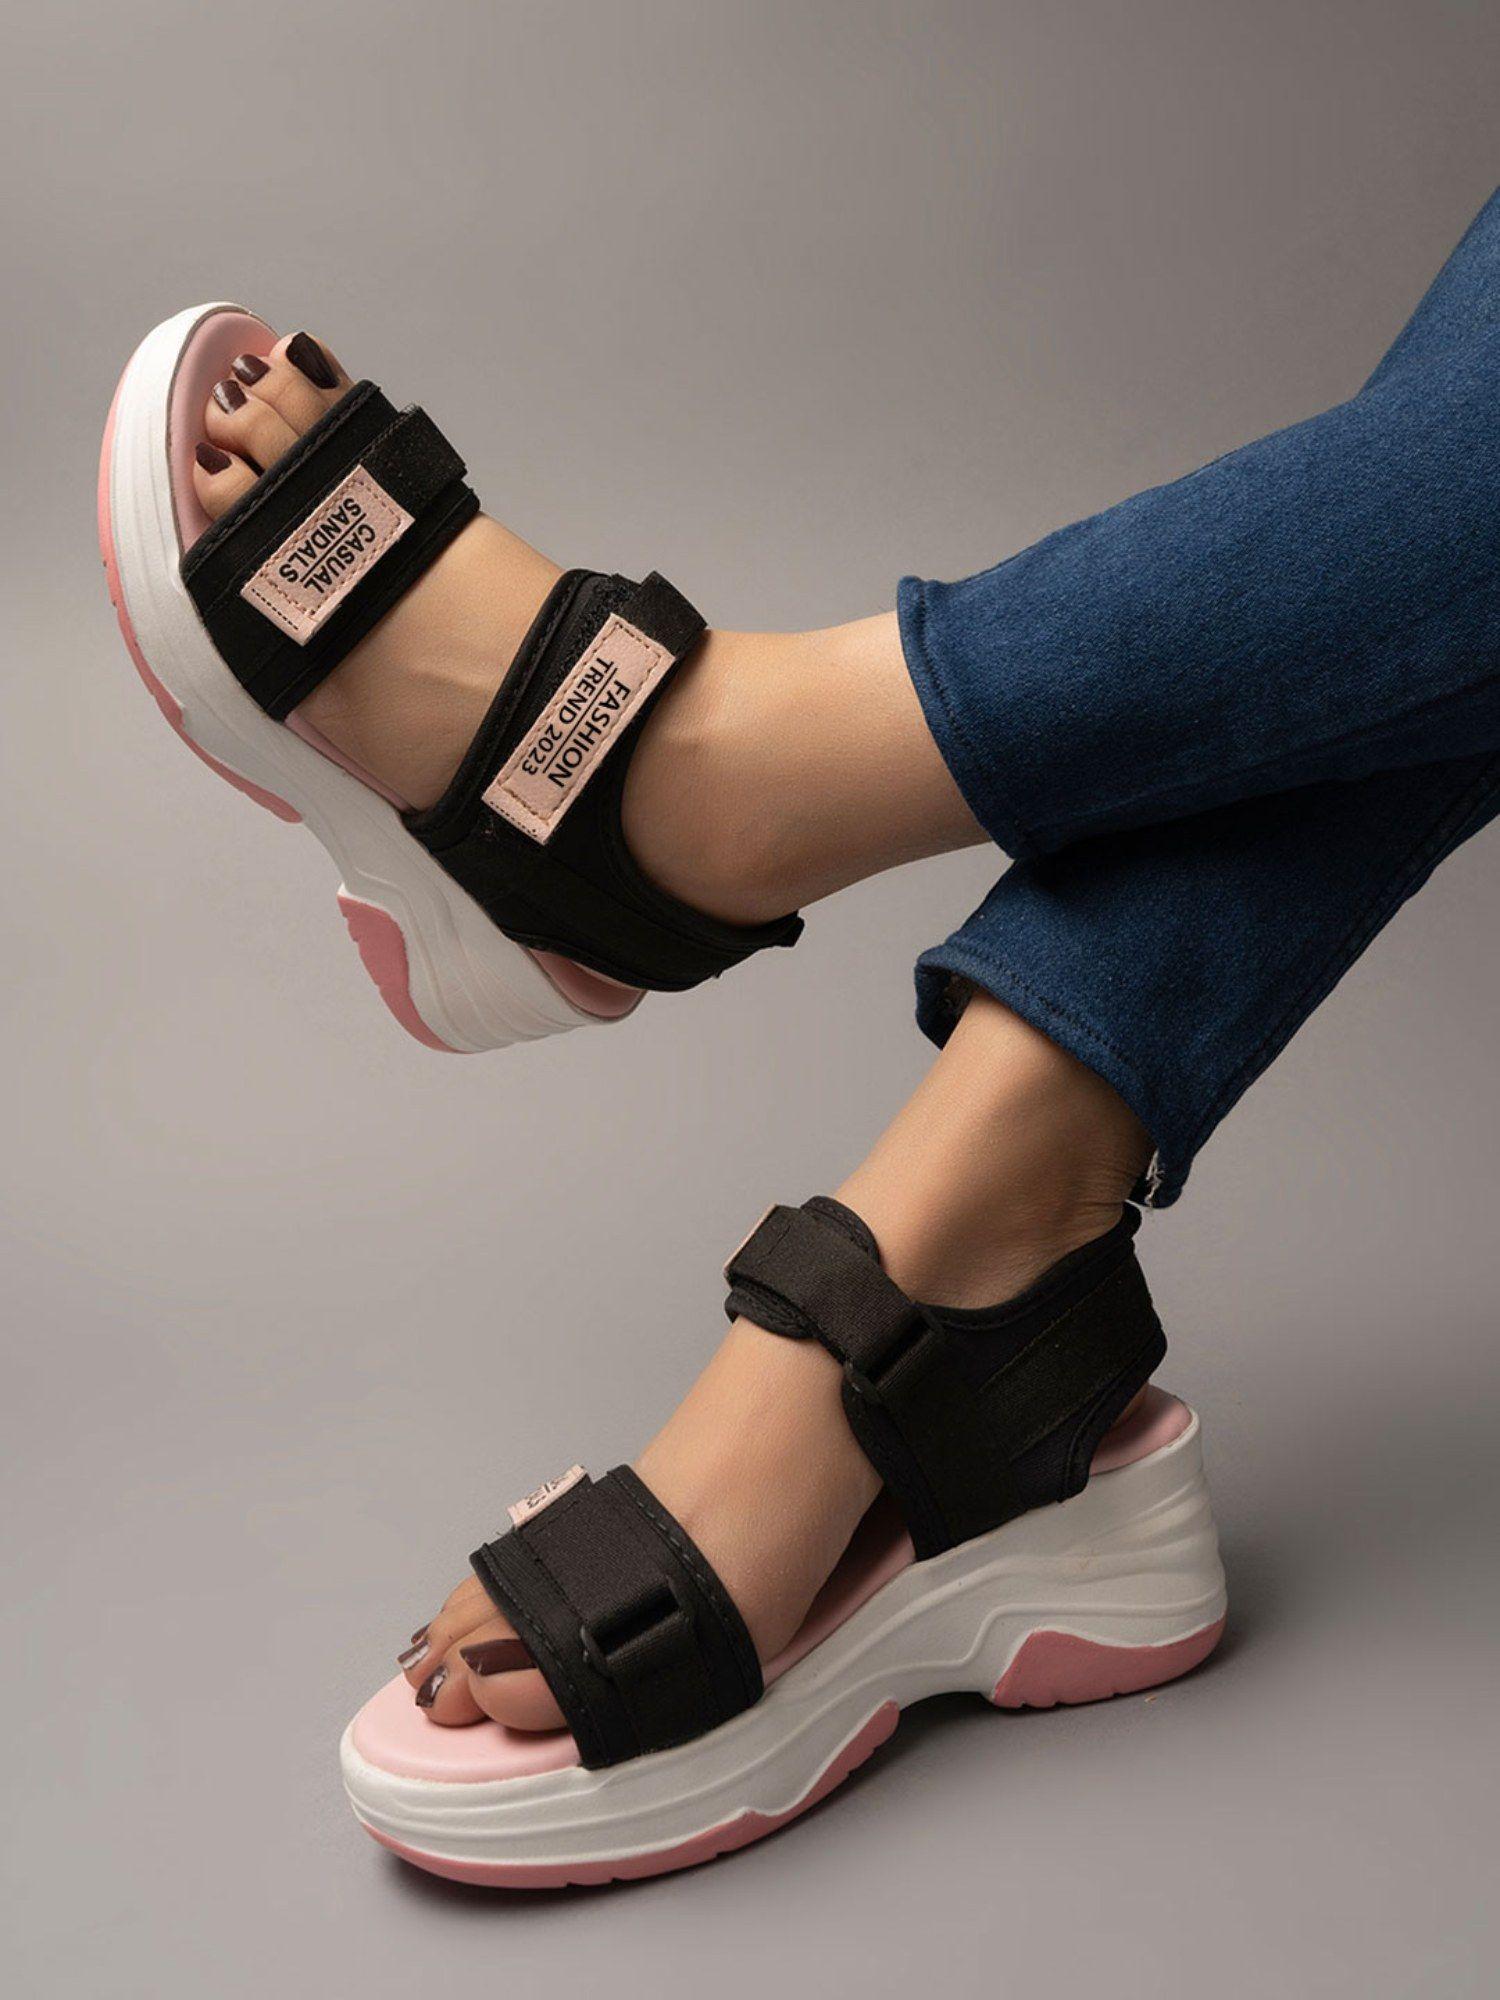 lightweight comfortable daily wear & trendy flatforms pink sandals for girls